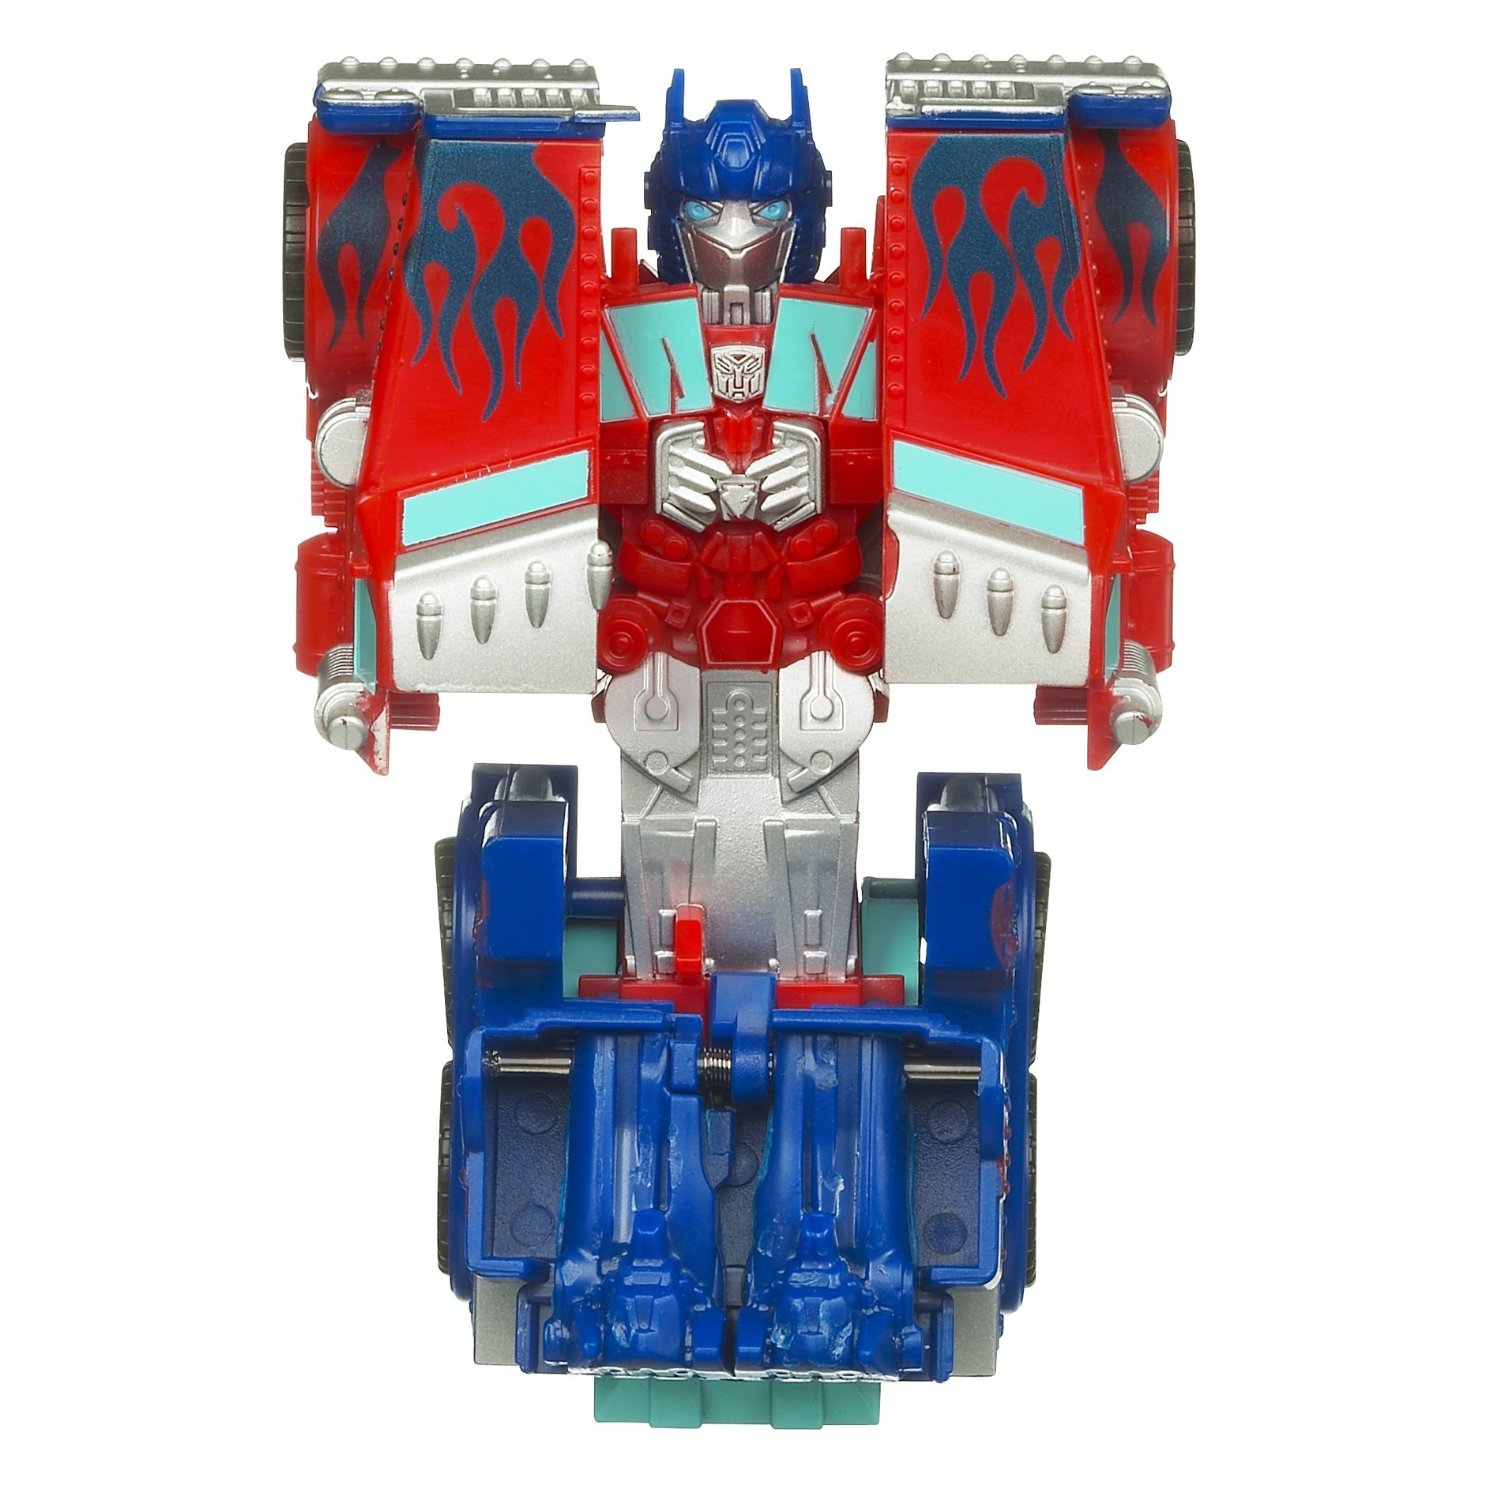 Transformers: Dark of the Moon Optimus Prime $5.99 (Reg. $10.99)